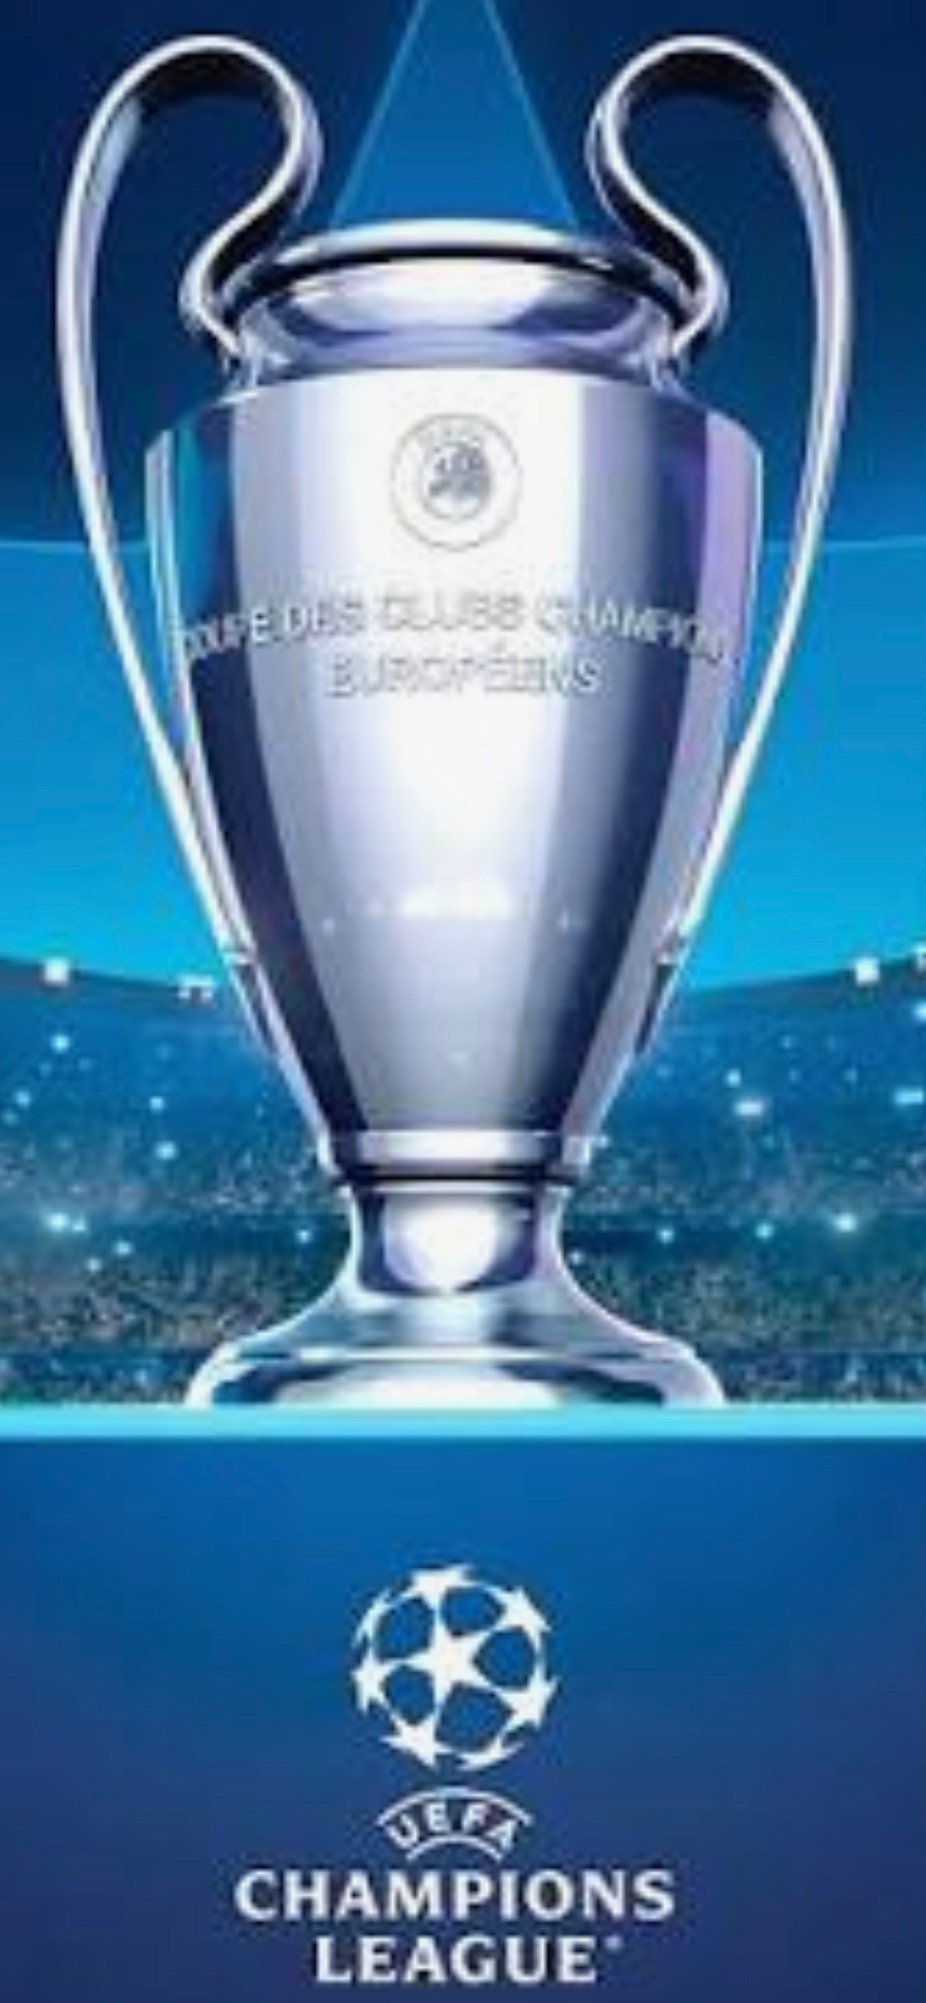 UEFA CHAMPIONS LEAGUE event photo